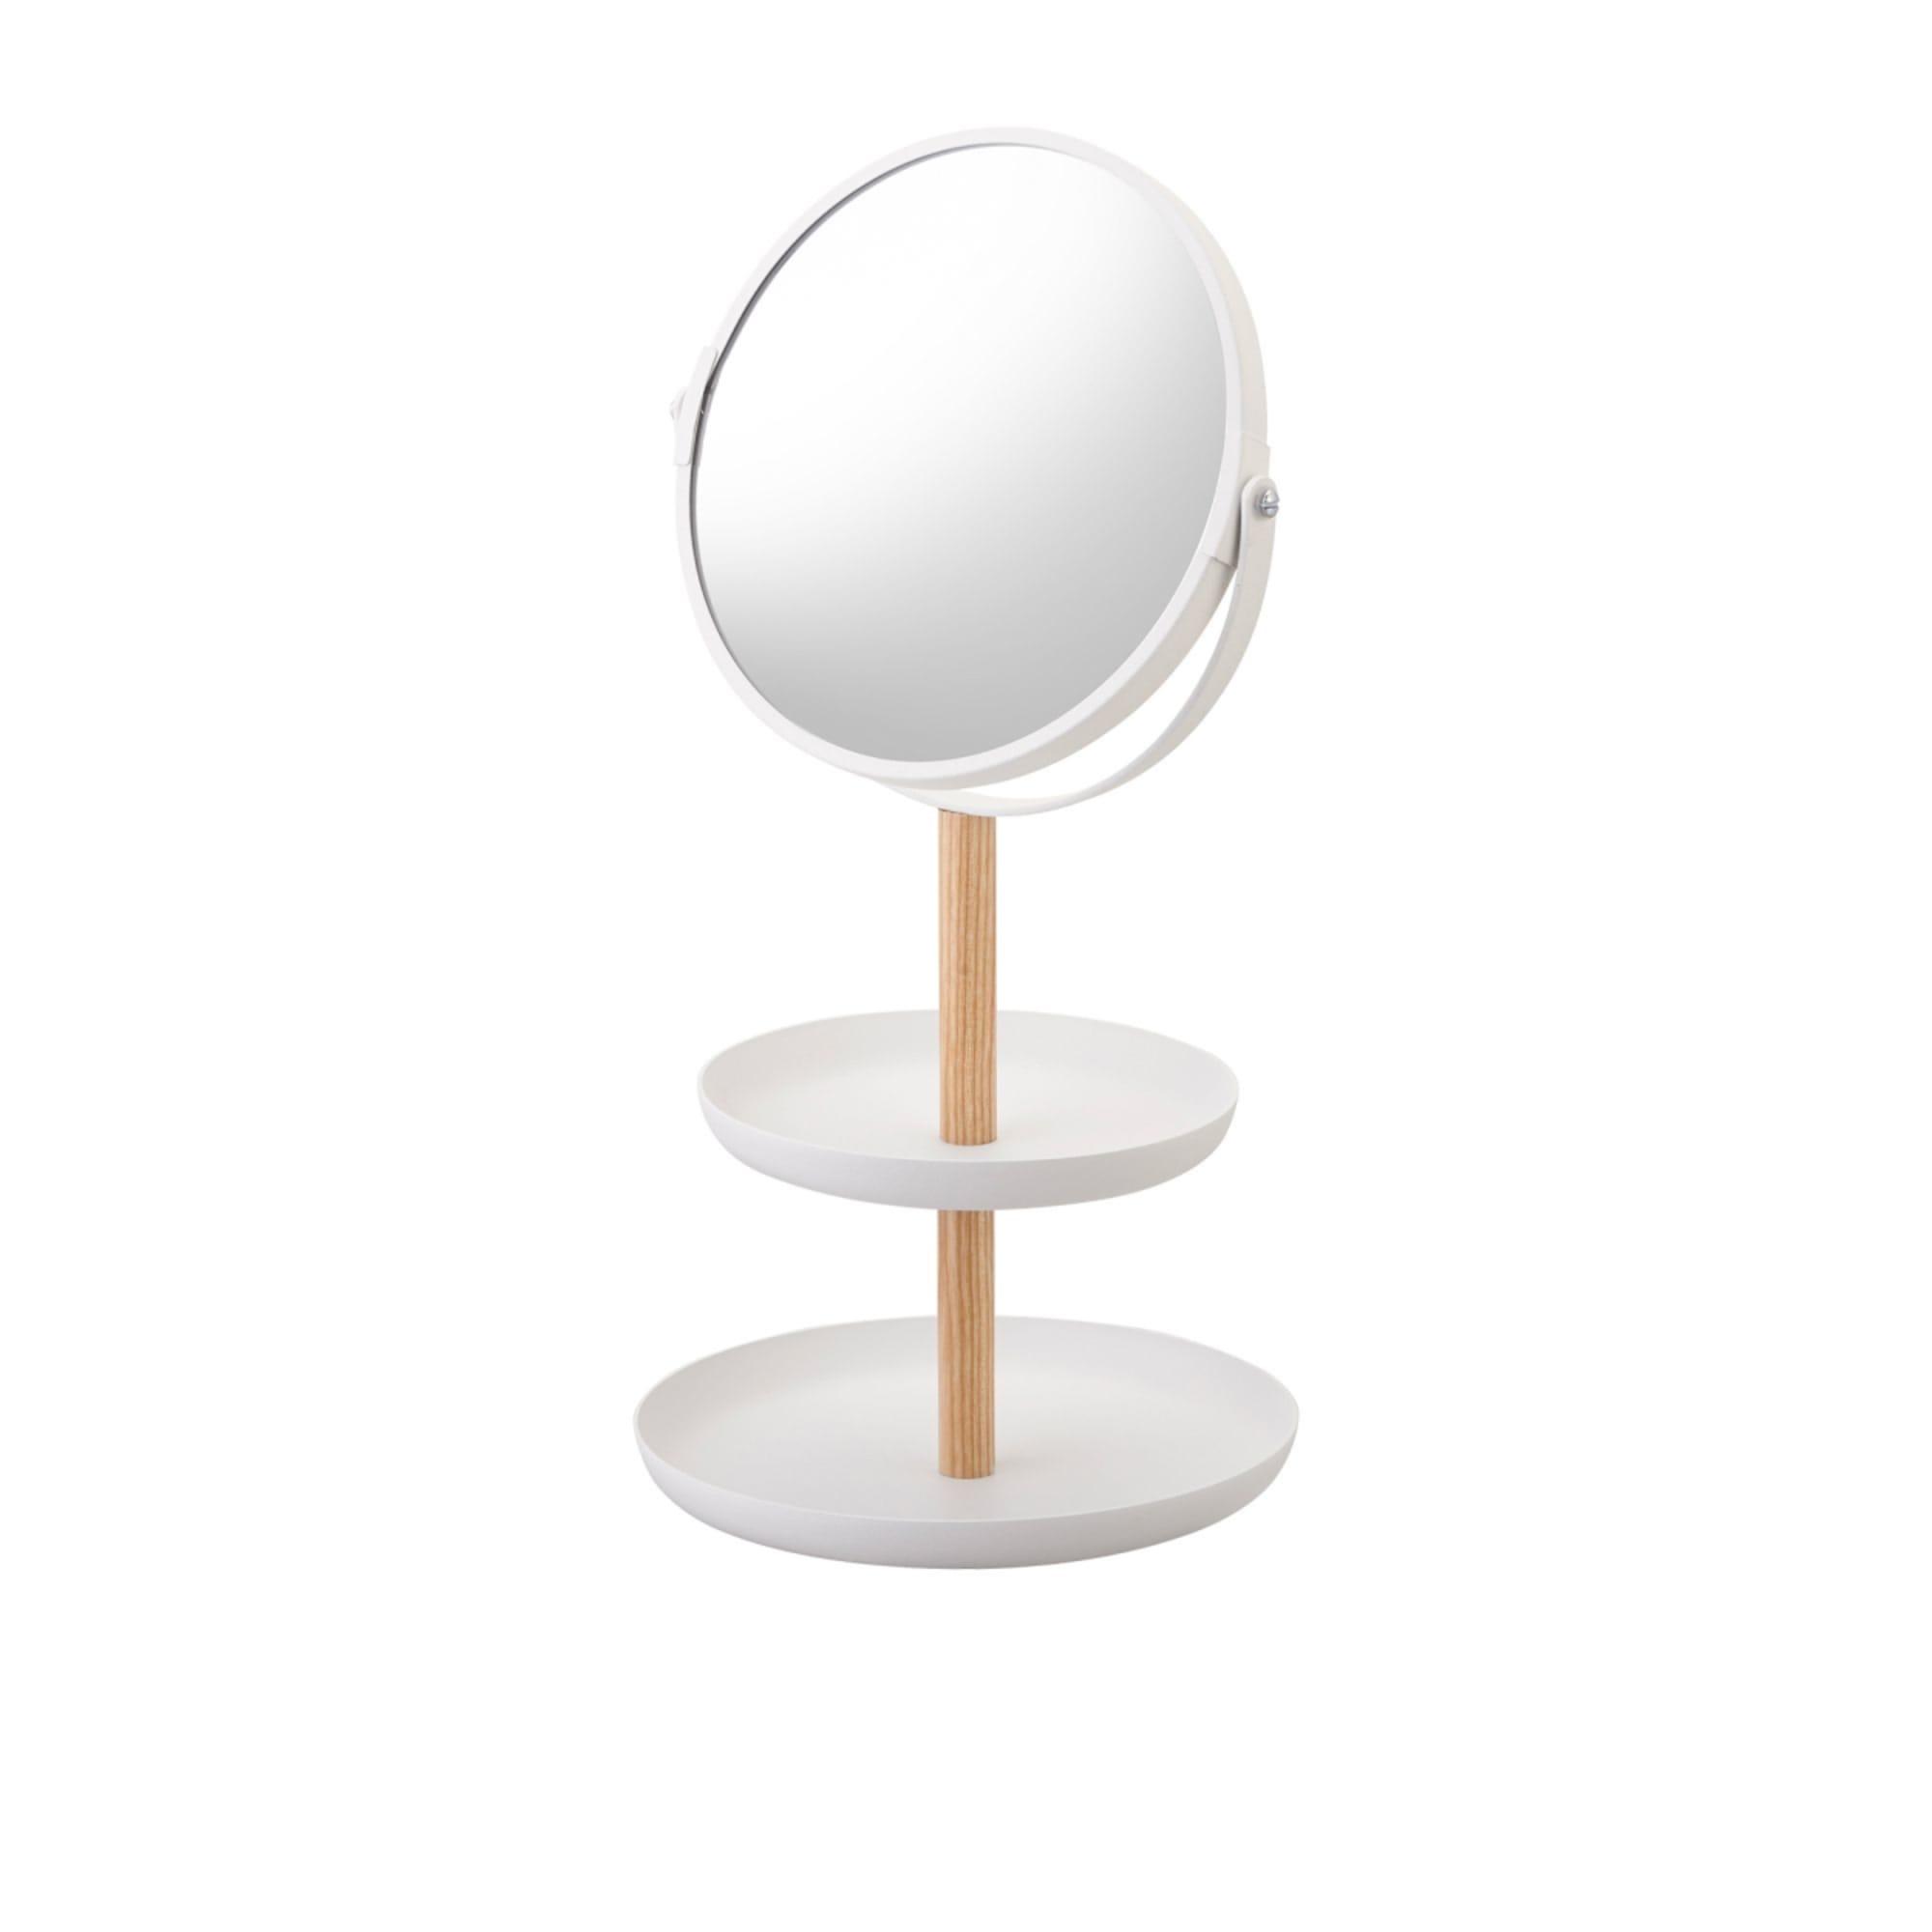 Yamazaki Tosca Mirror with Accessory Trays Image 1